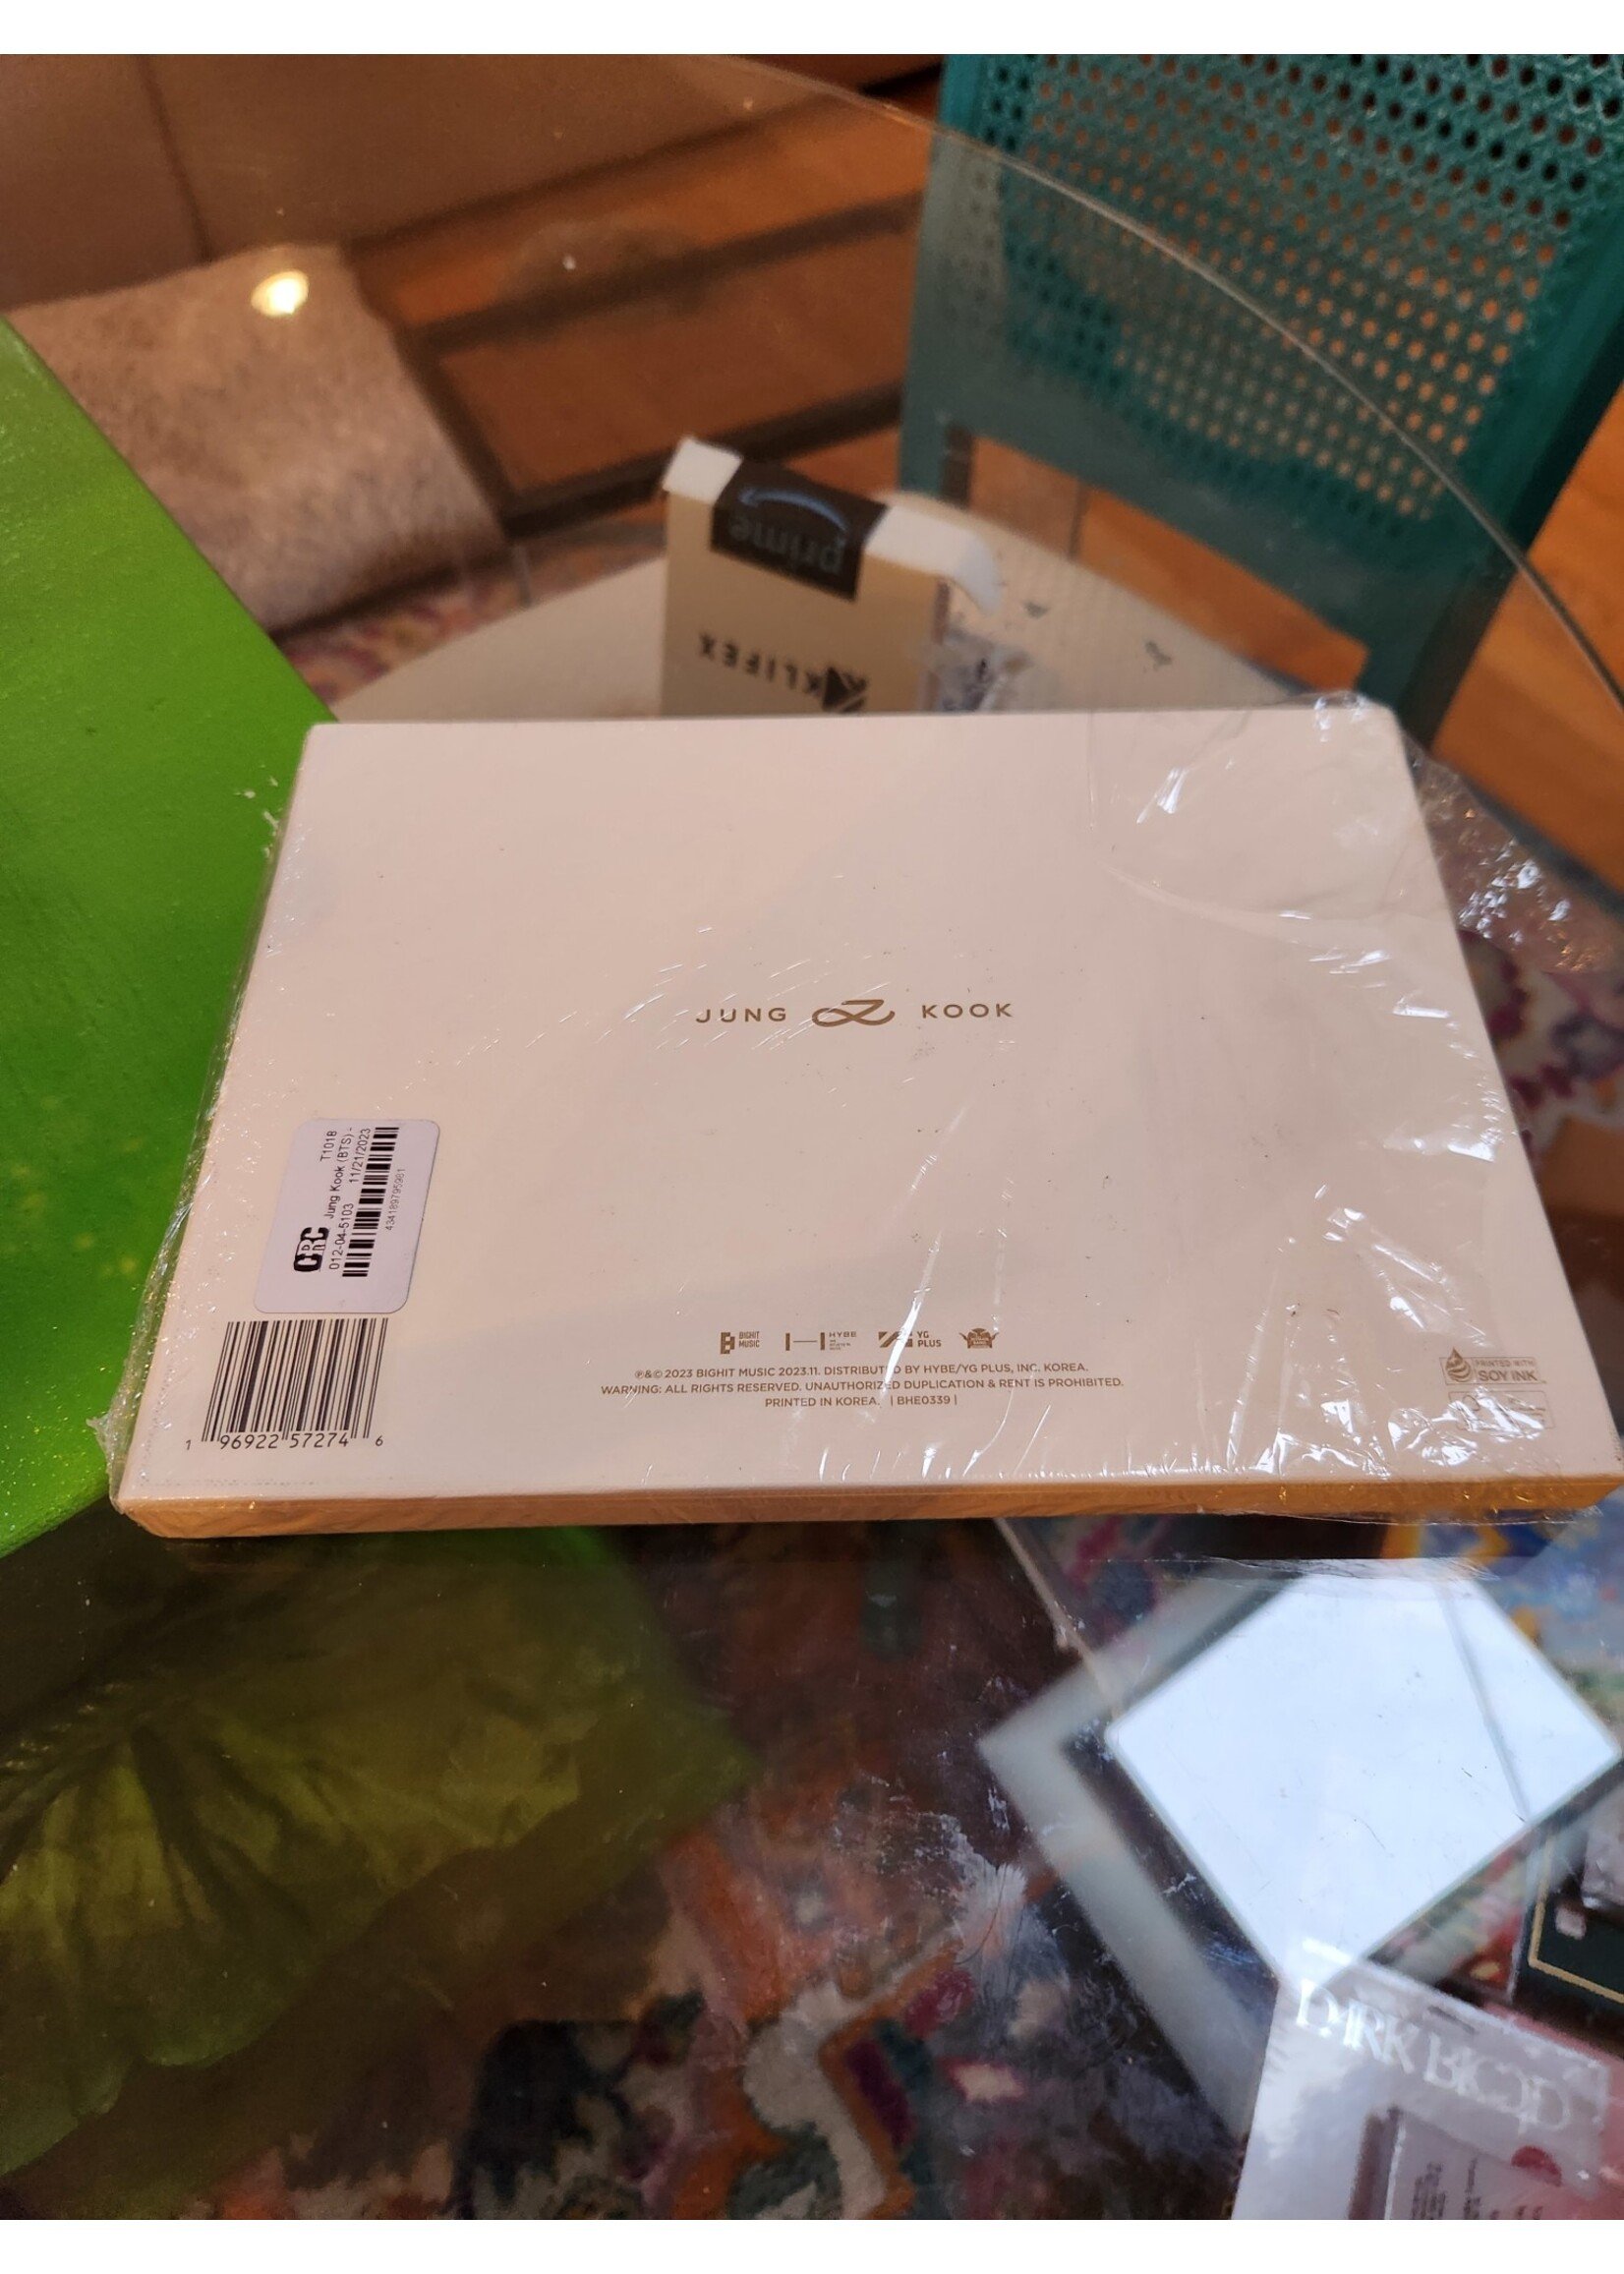 *Not Sealed* Jung Kook (BTS) CD - GOLDEN (Target Exclusive) White or Green Color Varies